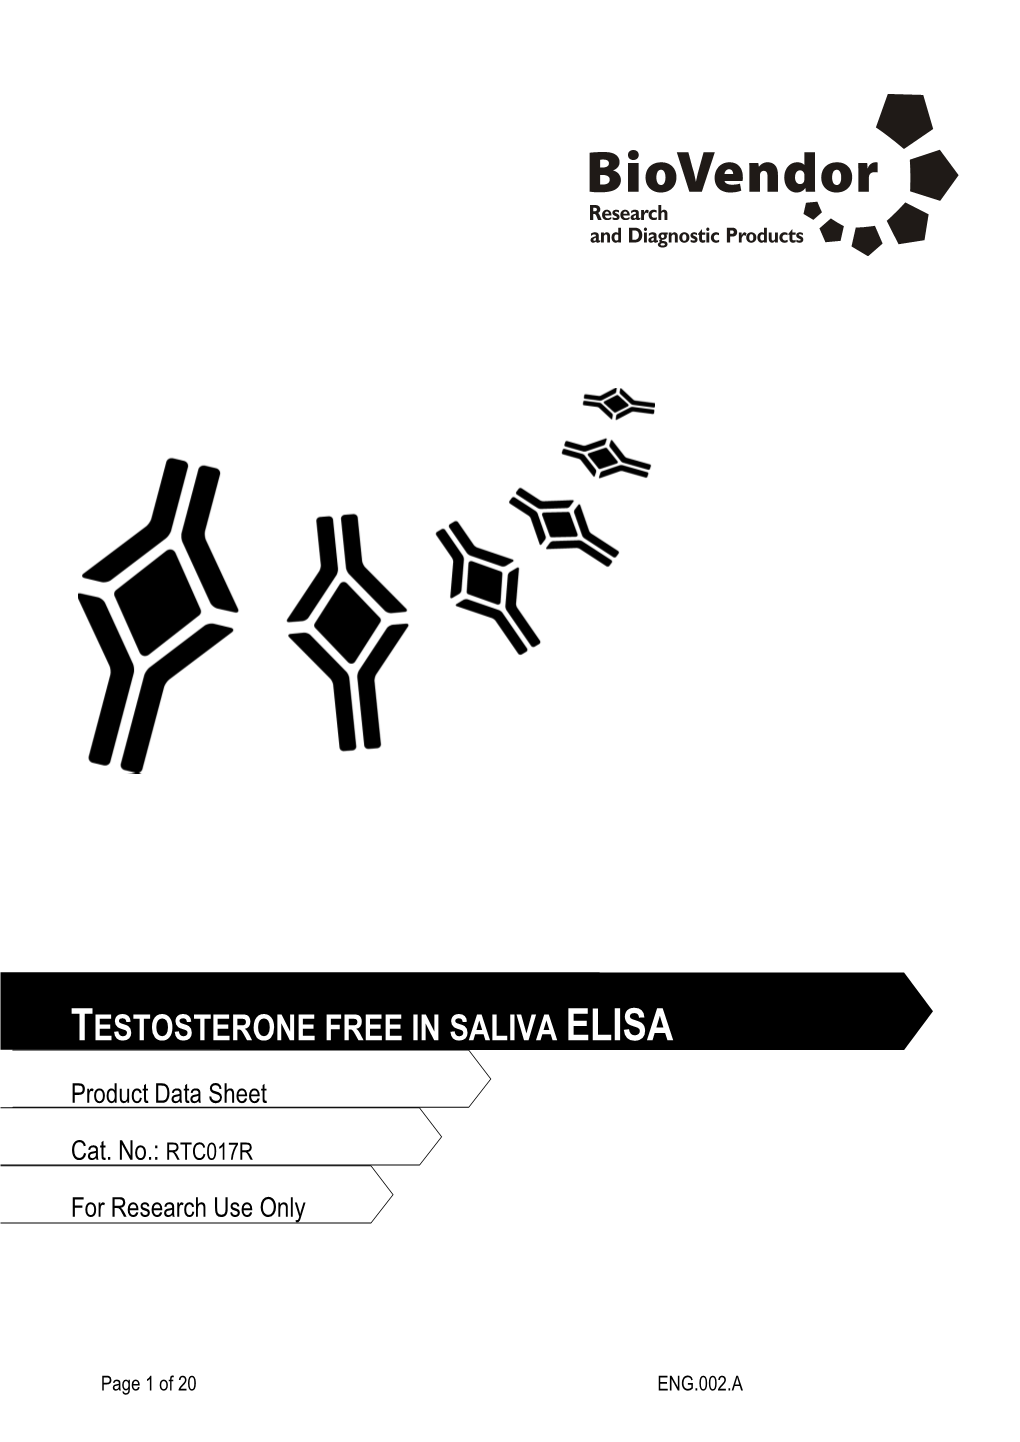 Testosterone Free in Saliva Elisa